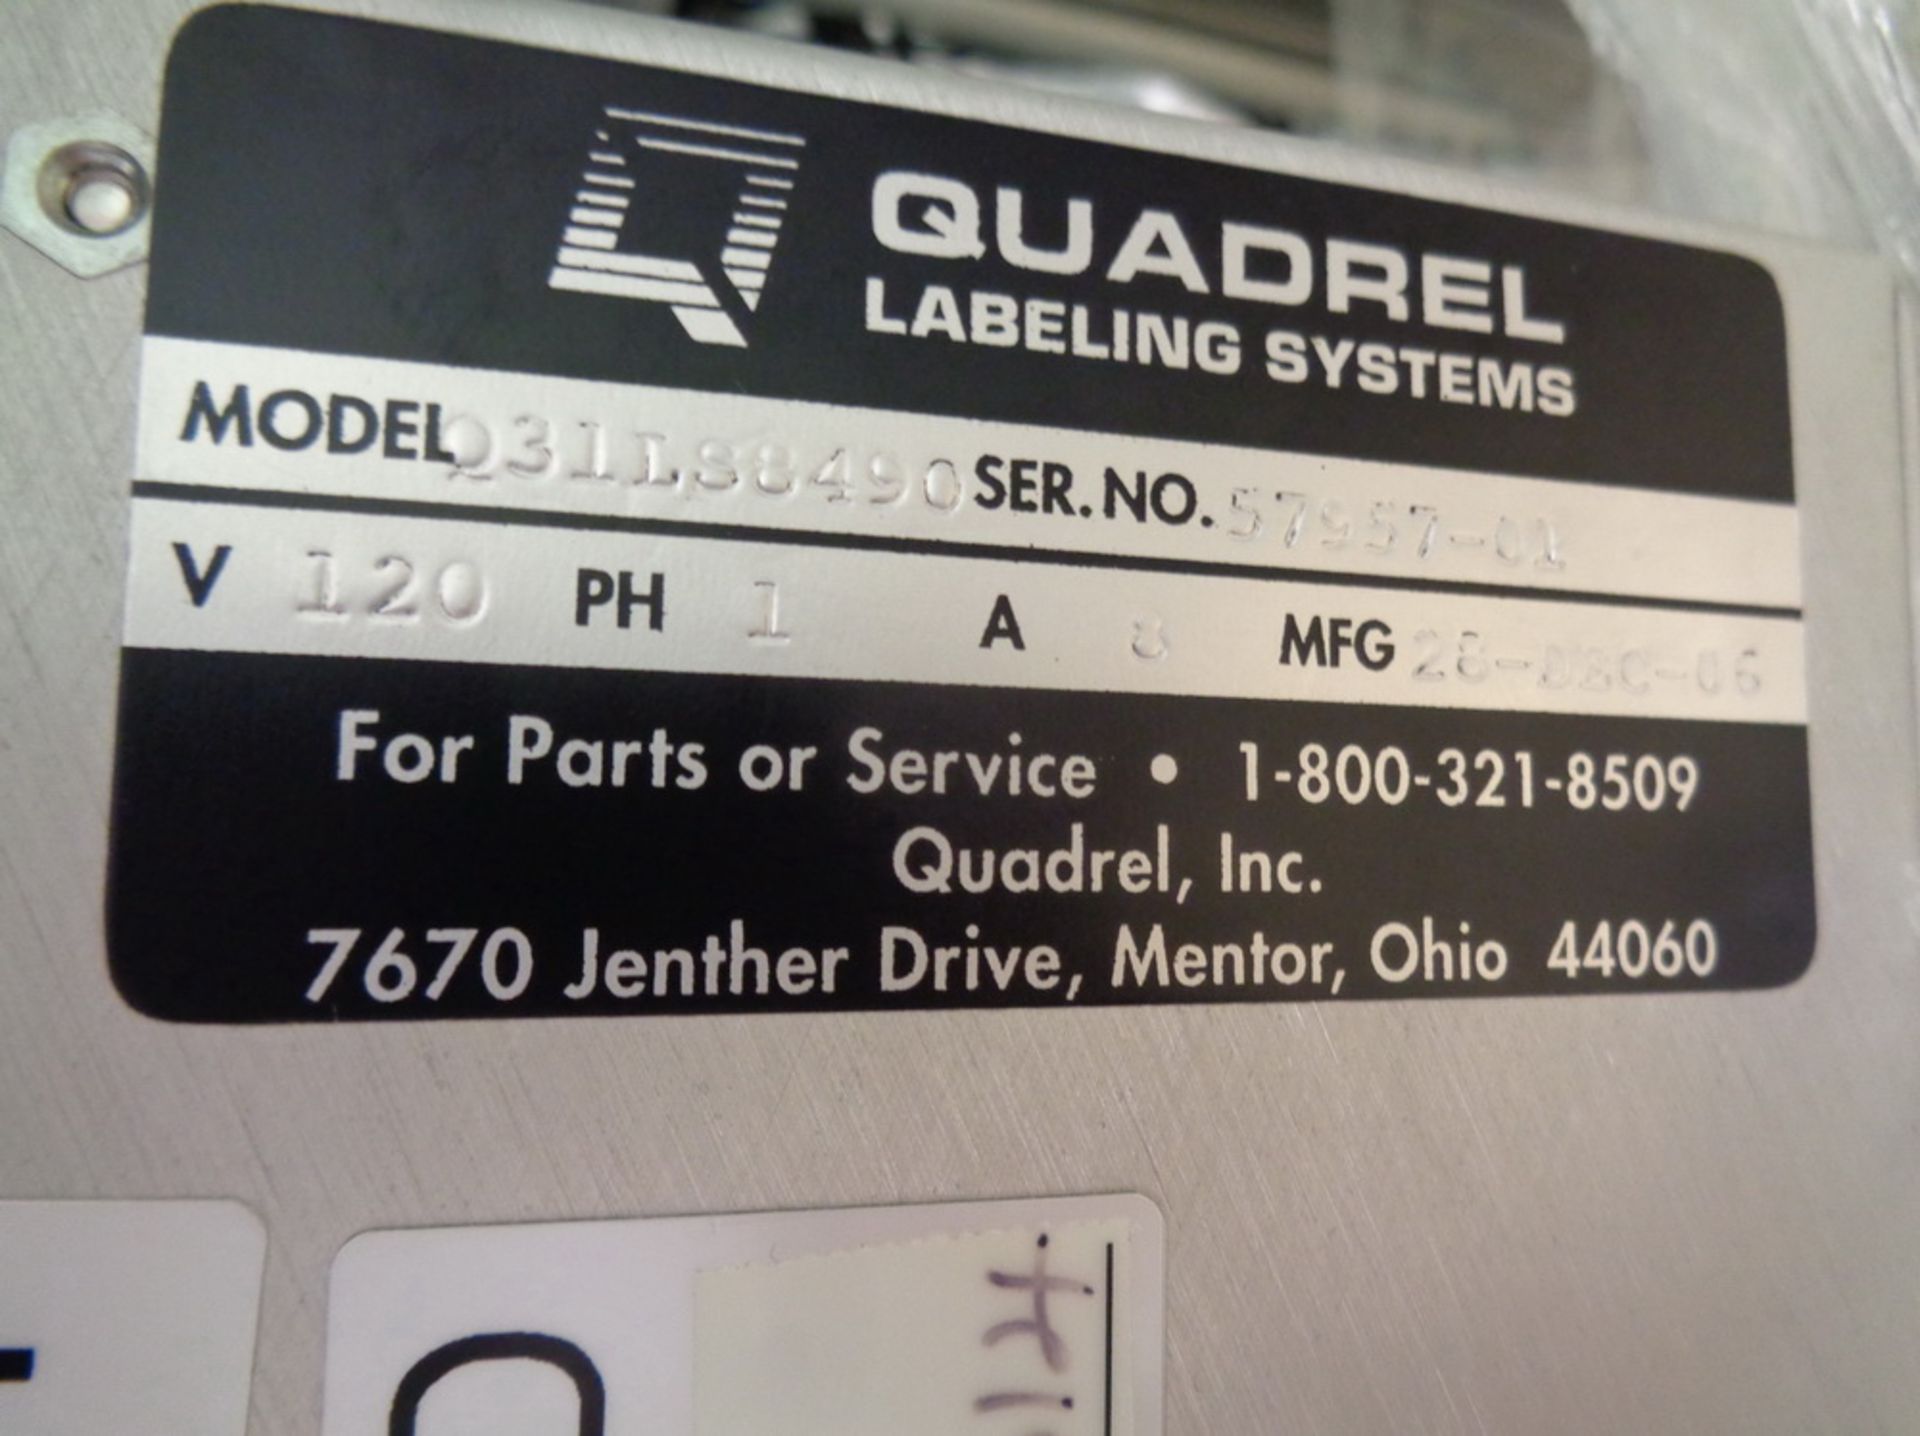 Quadrel Print and Apply Pressure Sensitive Carton Labeler, Model Q31-LS8490, S/N 57957-01 - Image 11 of 11